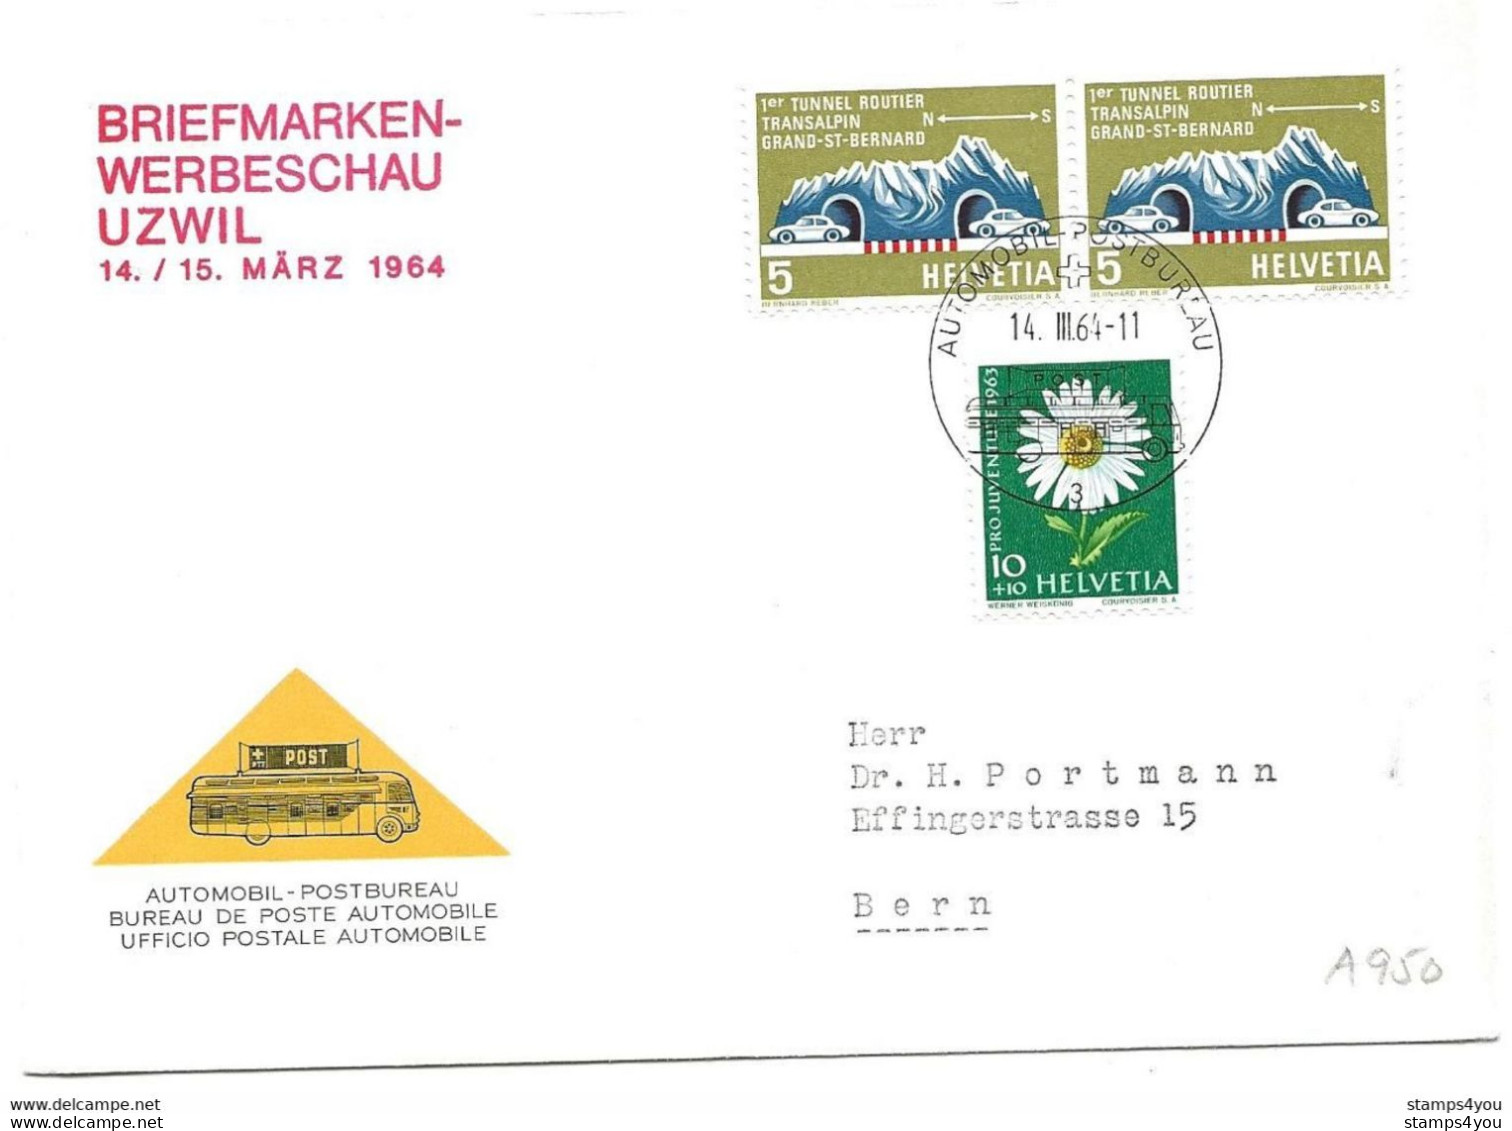 270 - 16 - Enveloppe Avec Oblit Spéciale "Briefmarken Werbeschau Uzwil 1964" - Marcophilie